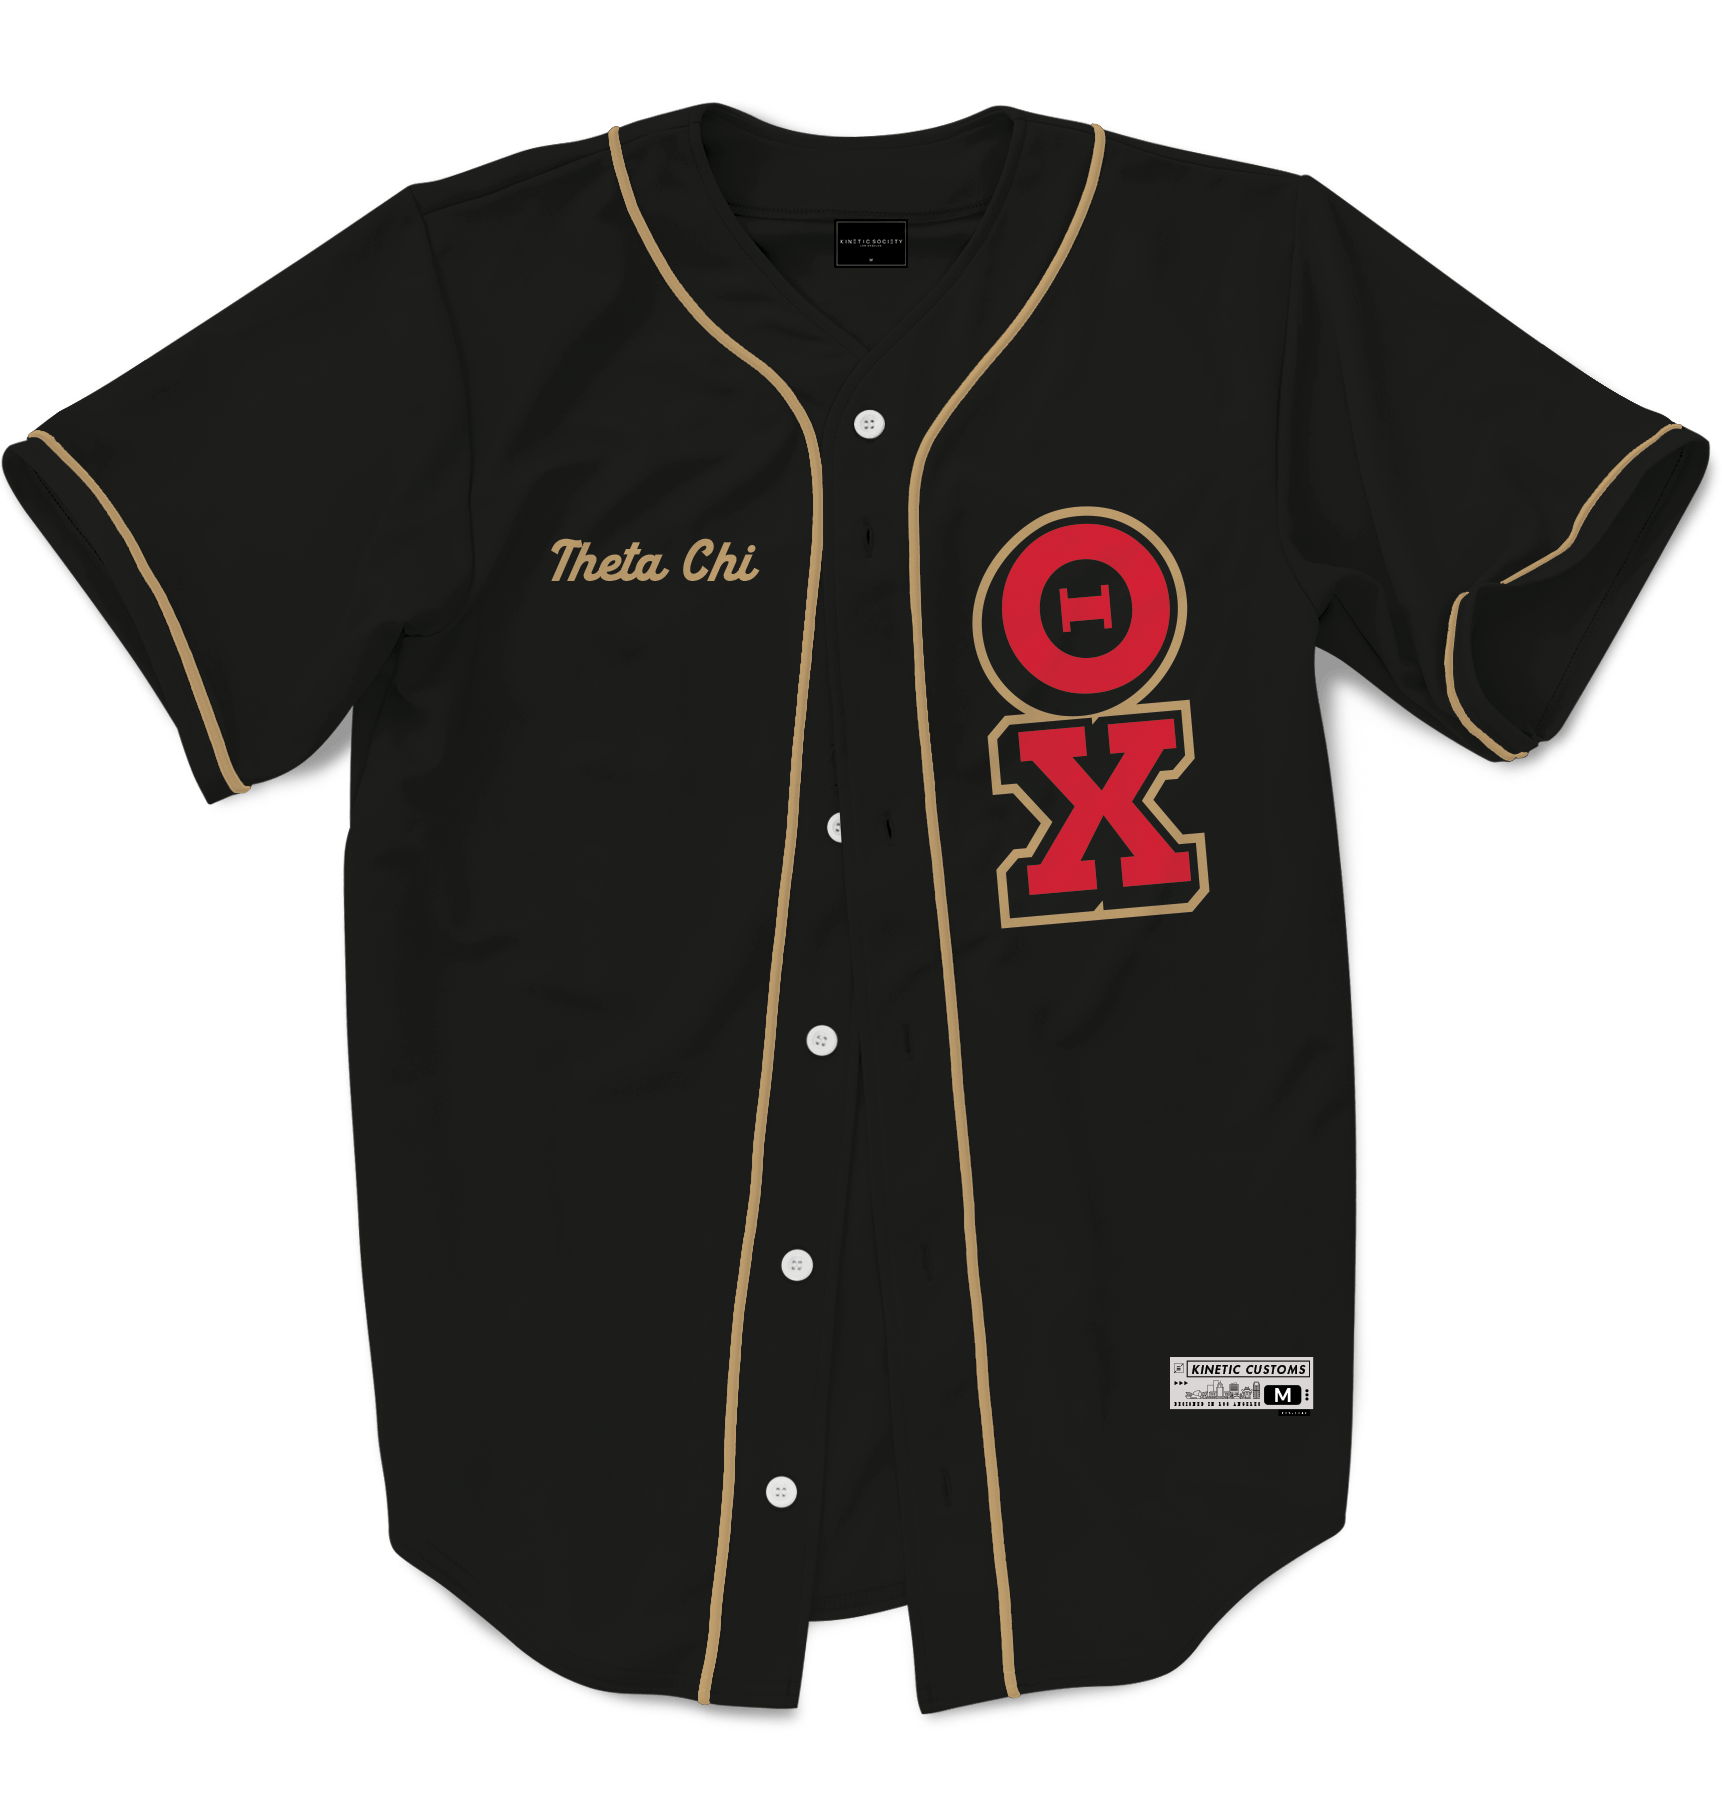 THETA CHI - The Block Baseball Jersey Premium Baseball Kinetic Society LLC 